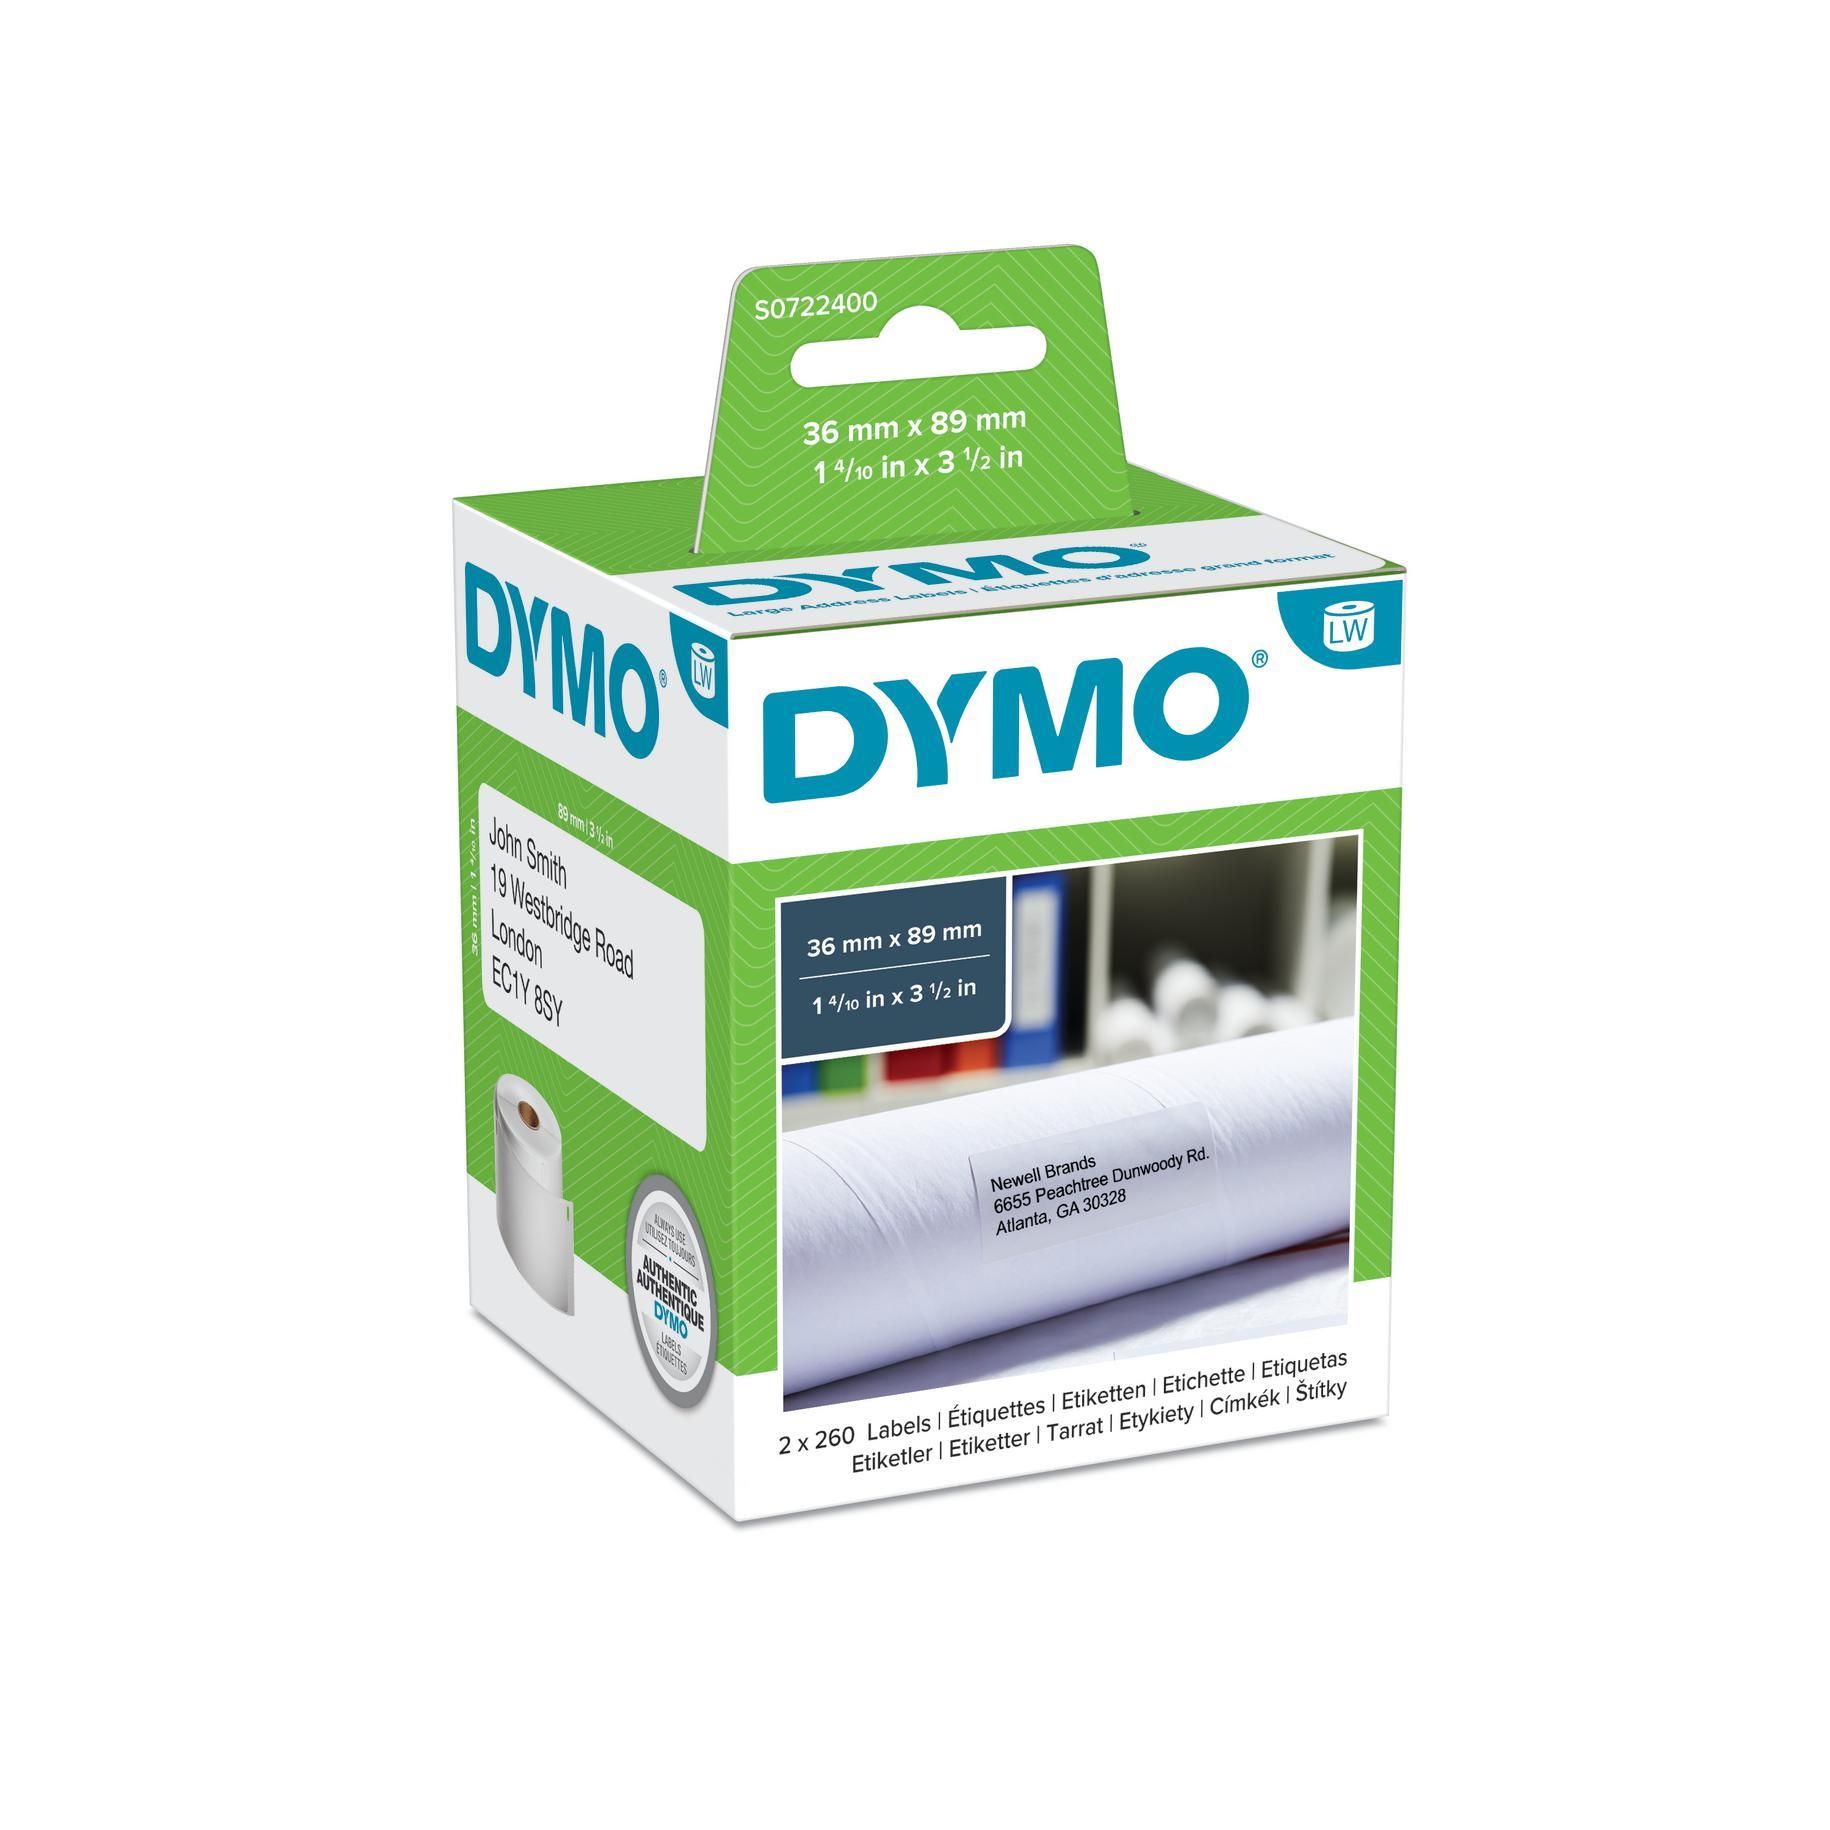 Dymo Cf2x260 Etichette Labelwriter